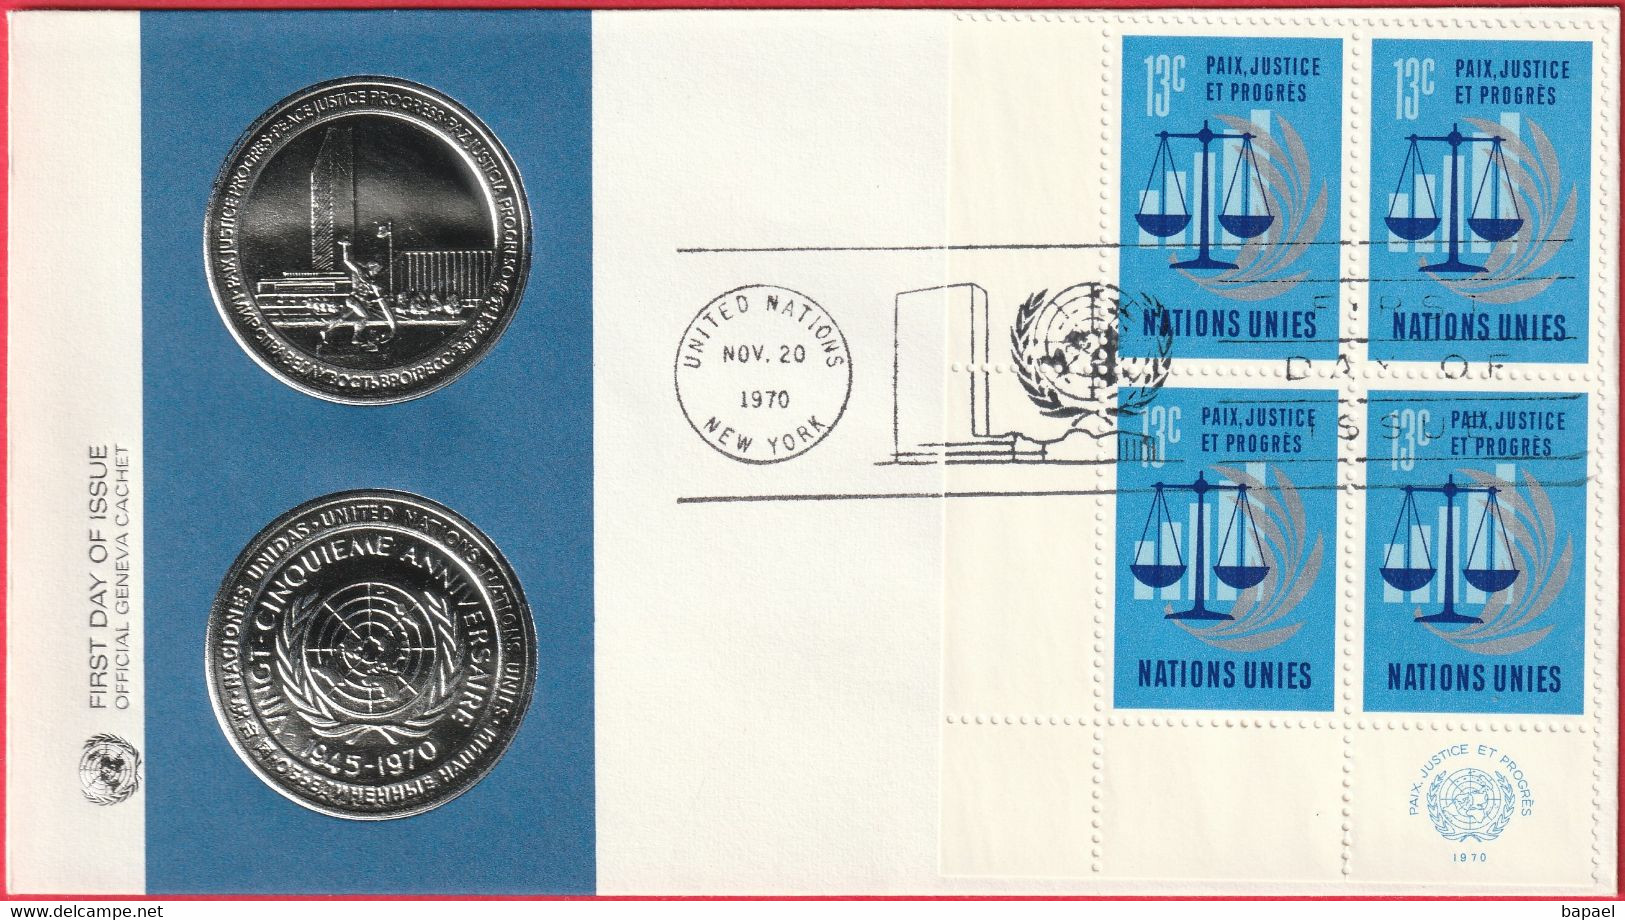 FDC - Enveloppe - Nations Unies - (New-York) (20-11-70) - Paix Justice Et Progrès (2) (Recto-Verso) - Covers & Documents